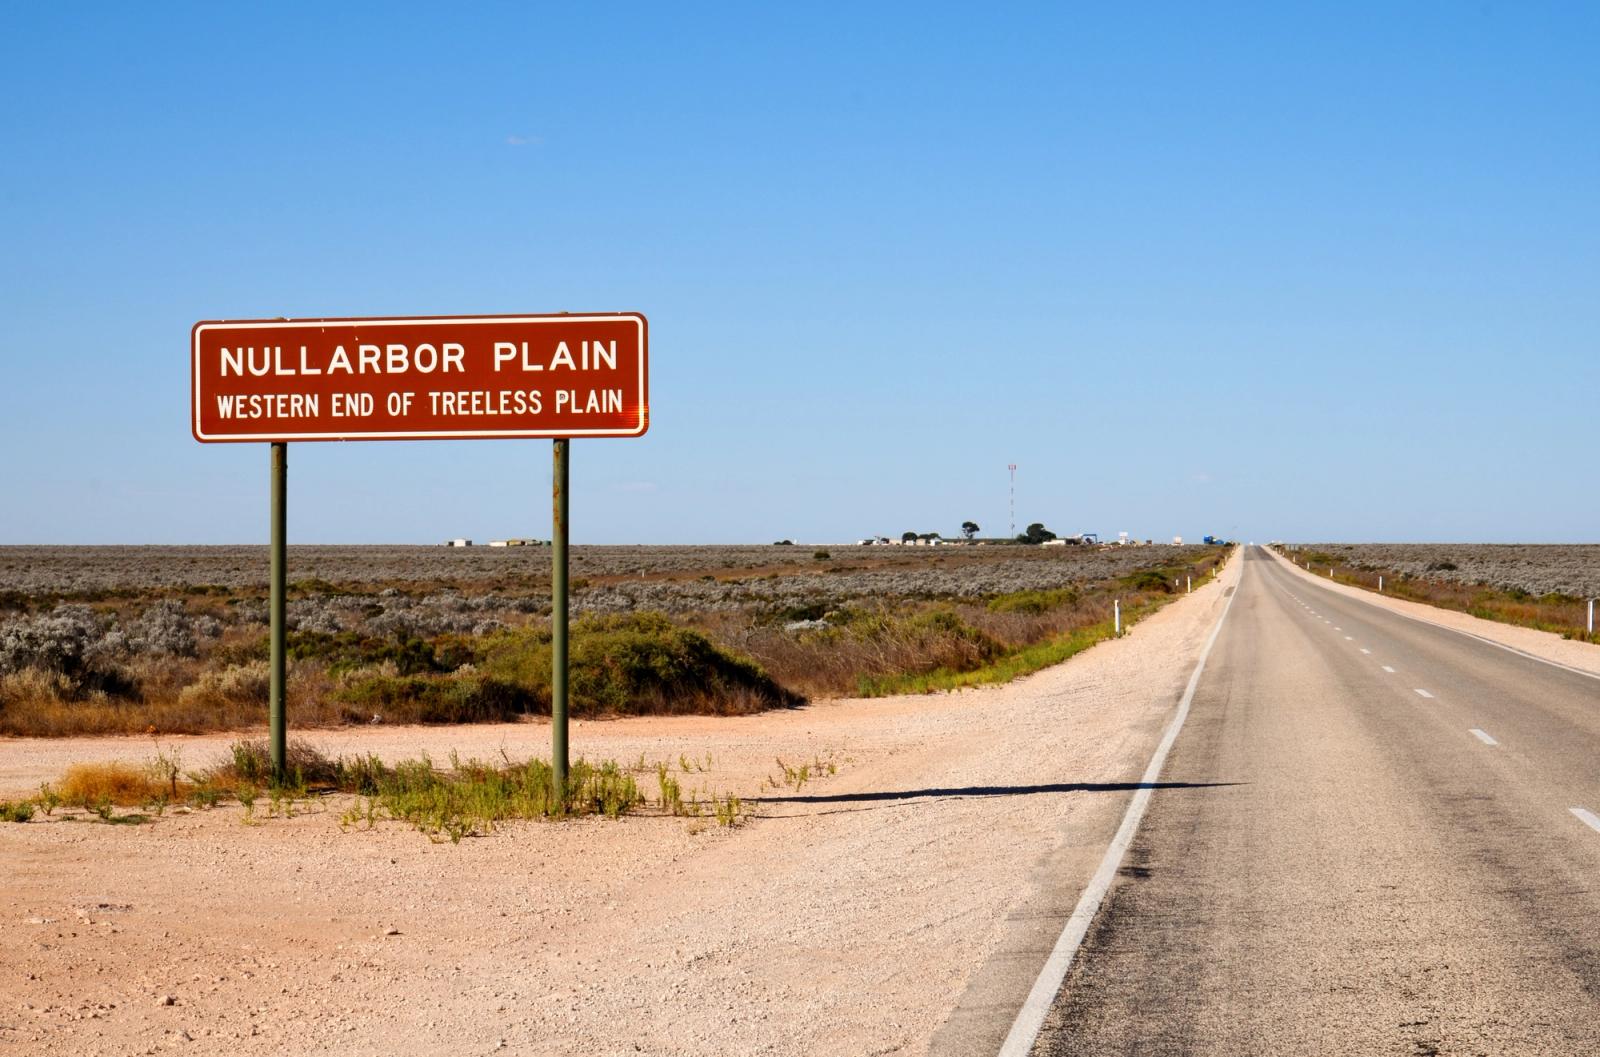 Nullarbor Plain sign on Eyre Highway near Nullarbor, South Australia.